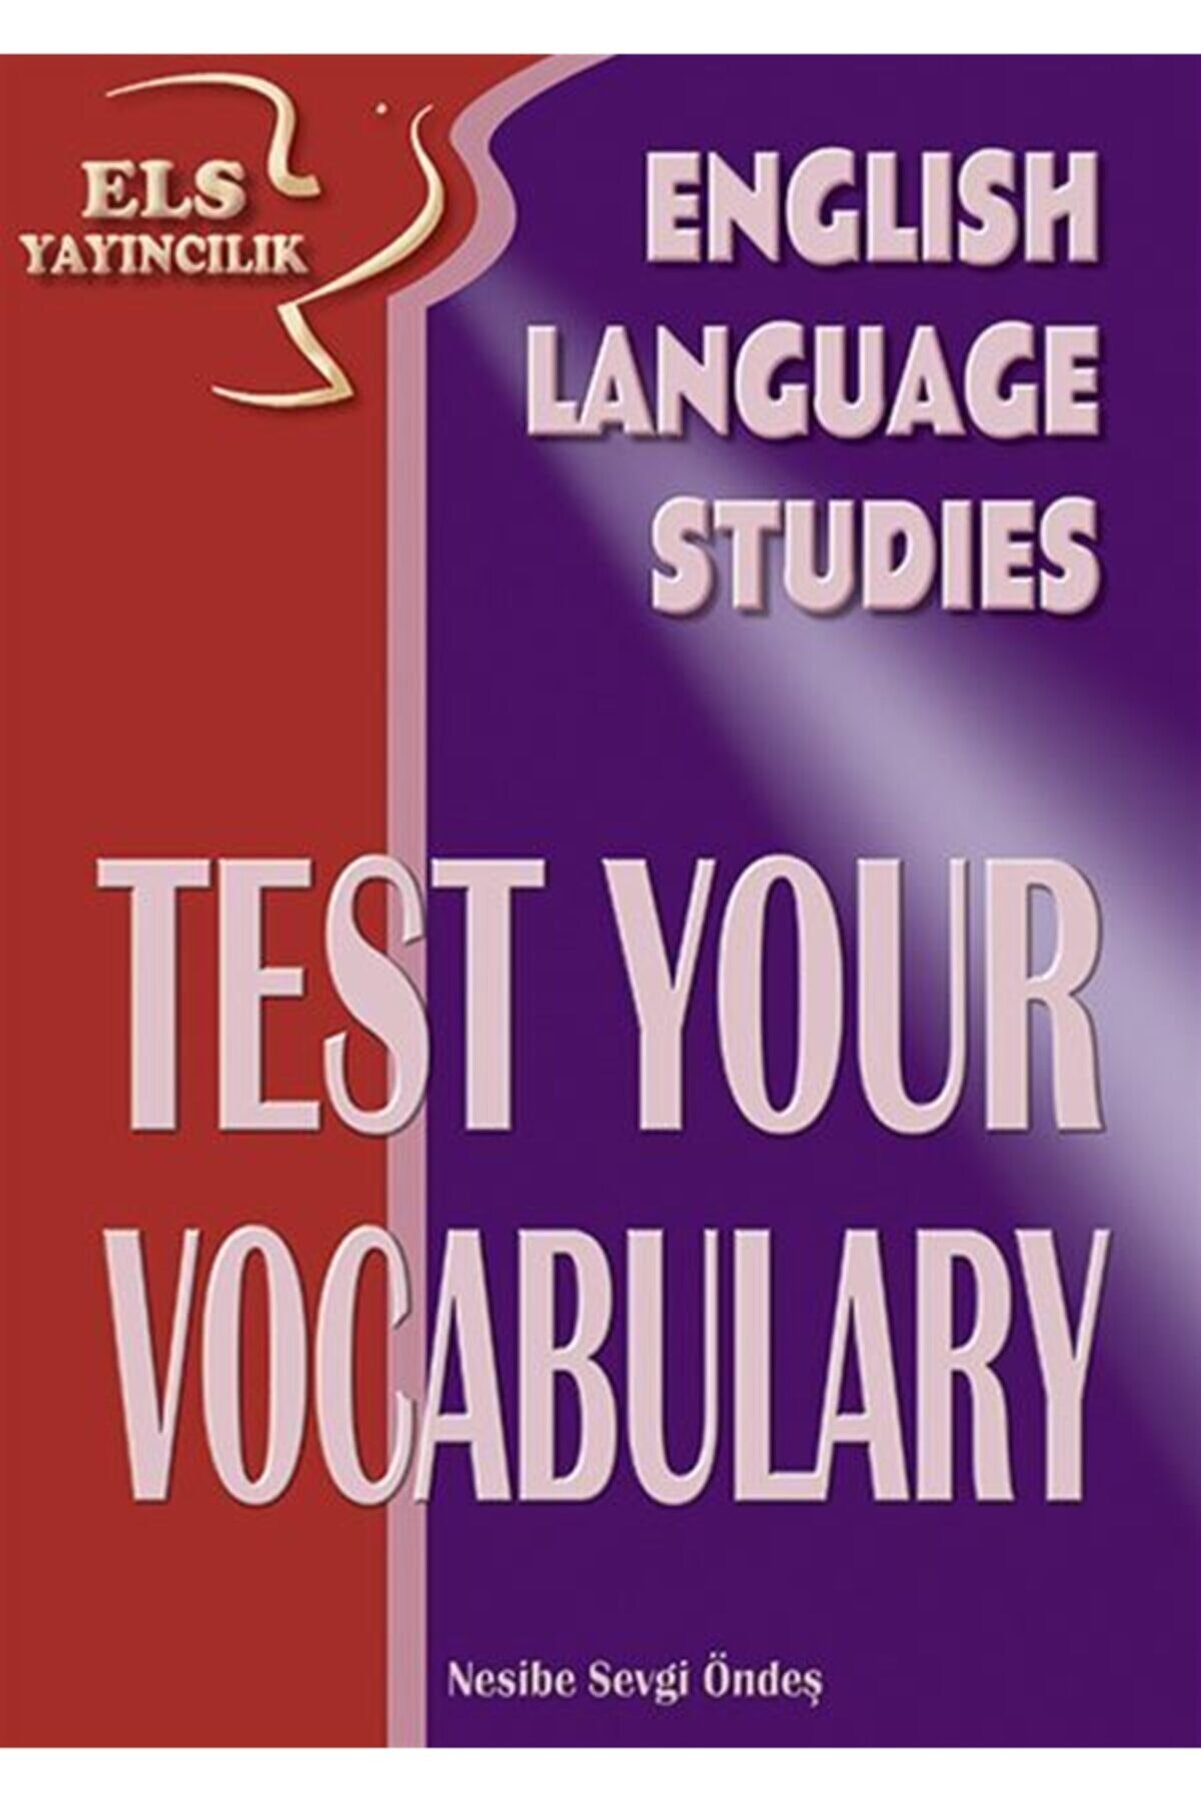 Els Yayıncılık Test Your Vocabulary